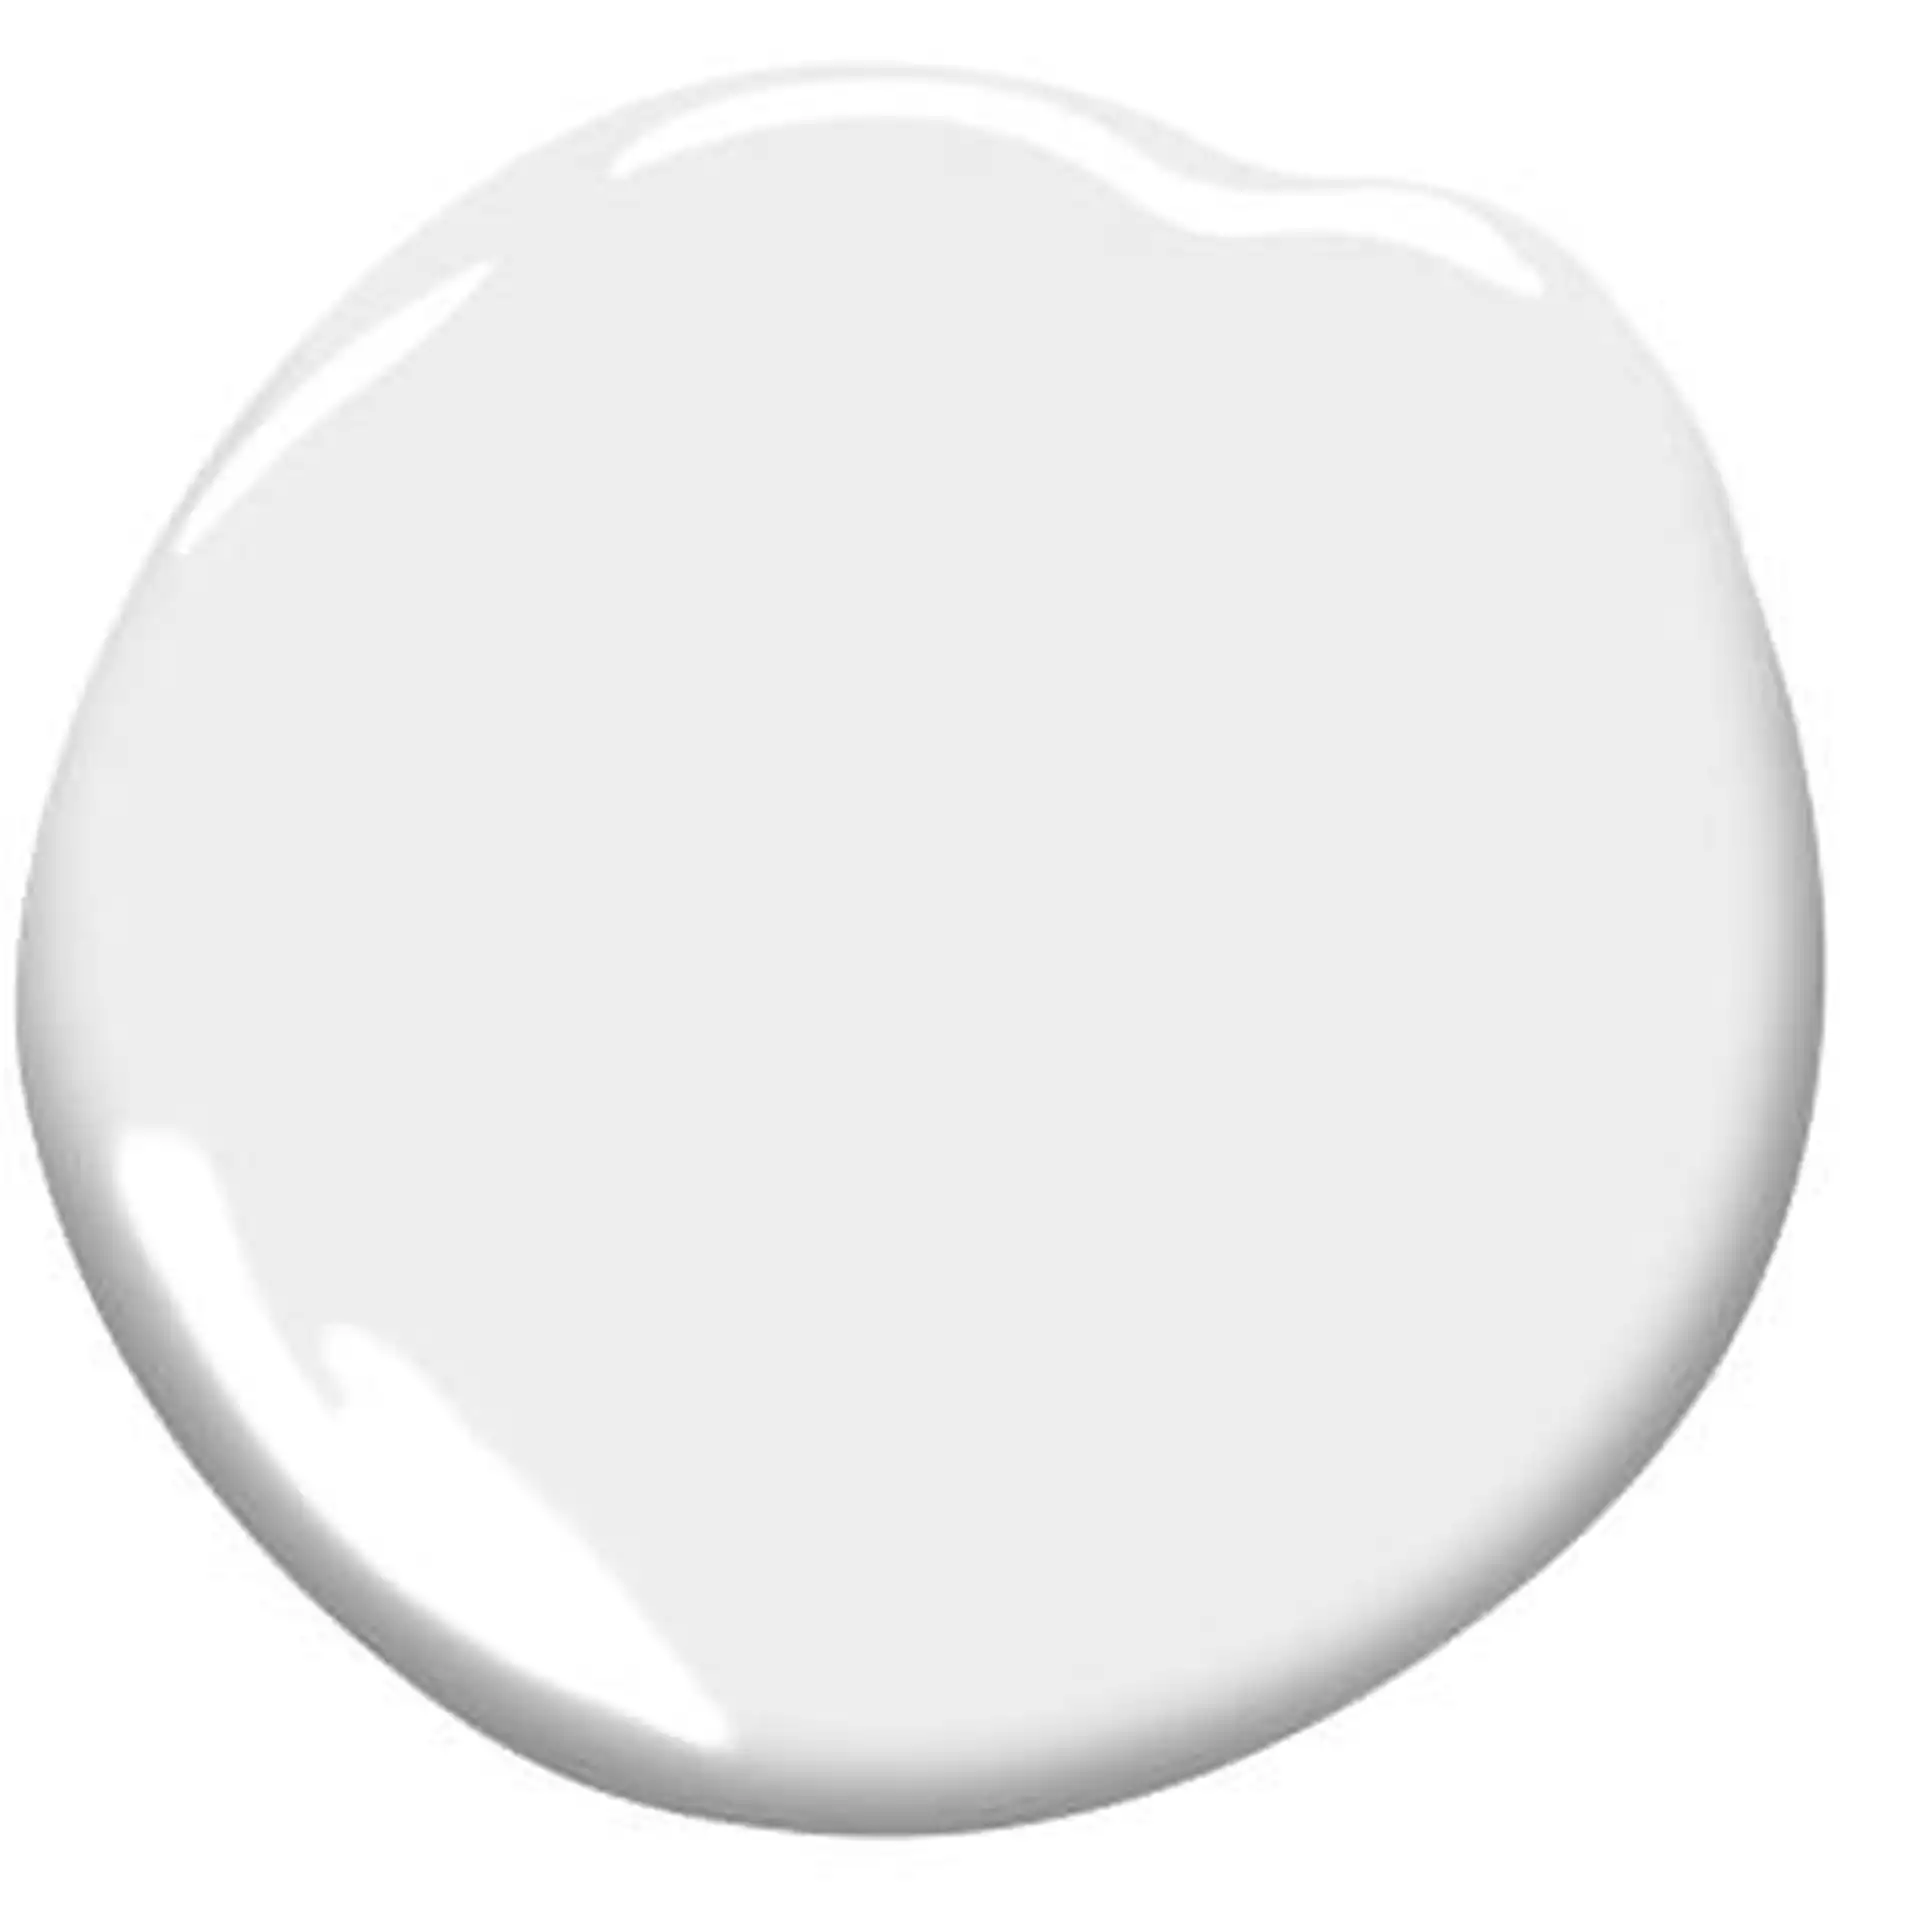 Decorator's White CC-20, Ben® Waterborne Interior Paint, Eggshell, Gallon